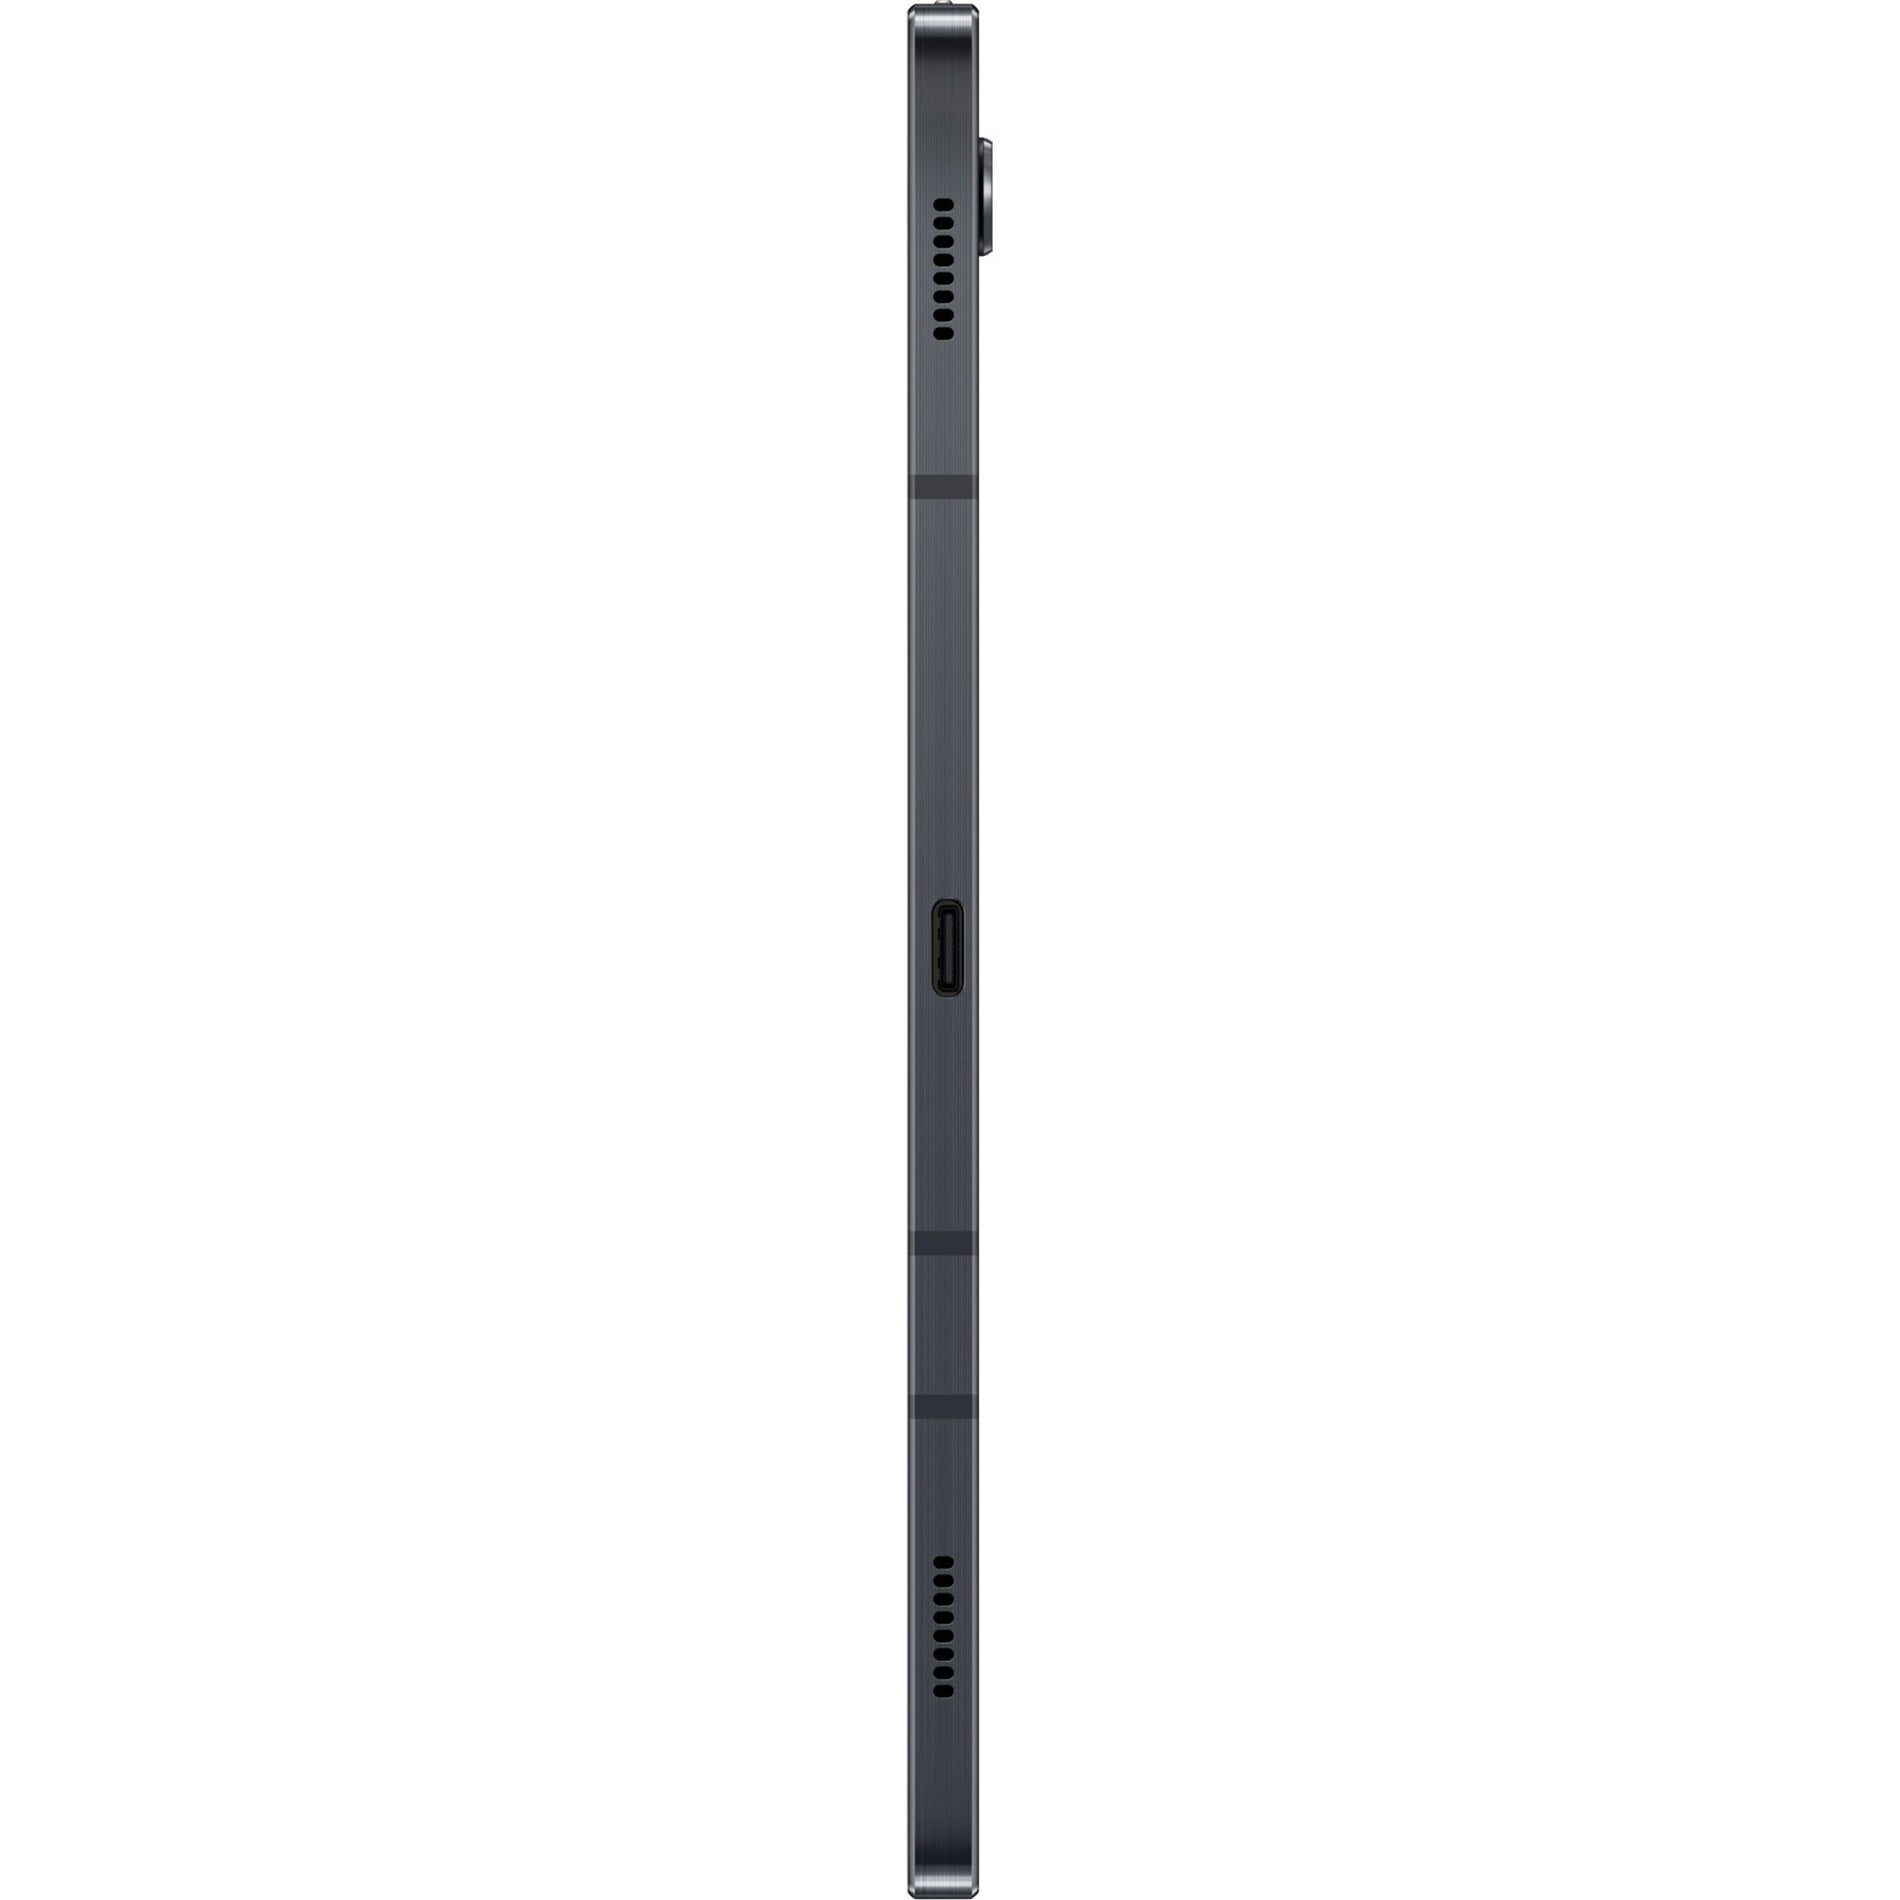 Samsung Galaxy Tab S7 128GB Wi-Fi Tablet - Black [Discontinued]